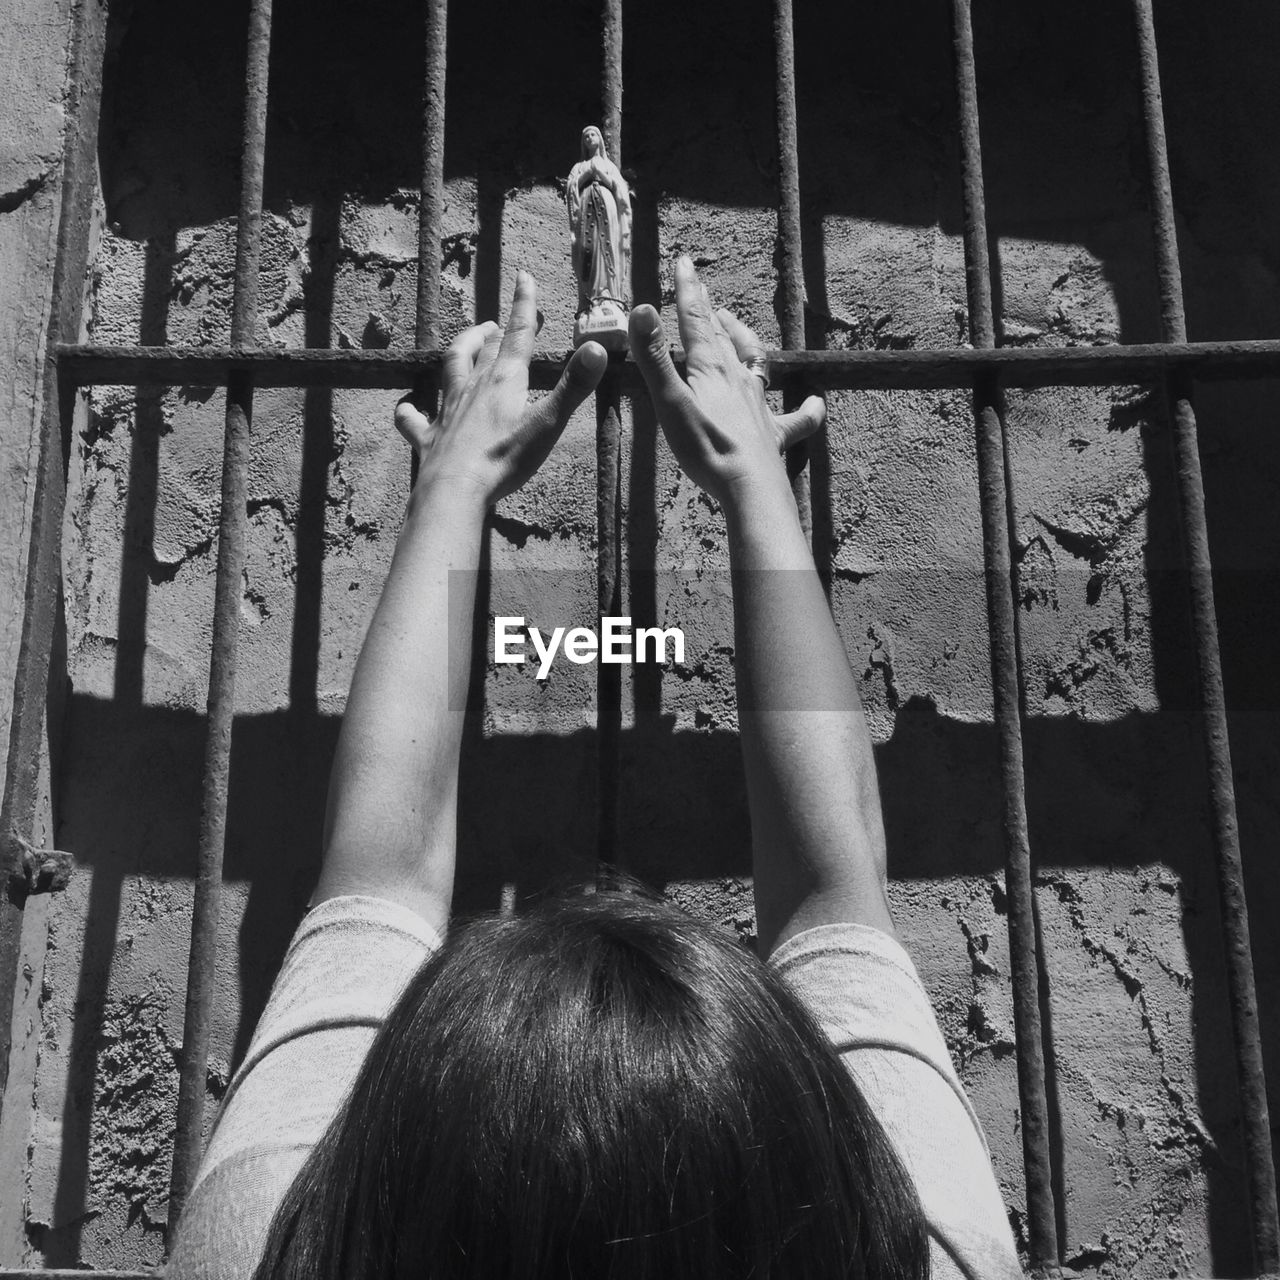 Woman praying before prison bars